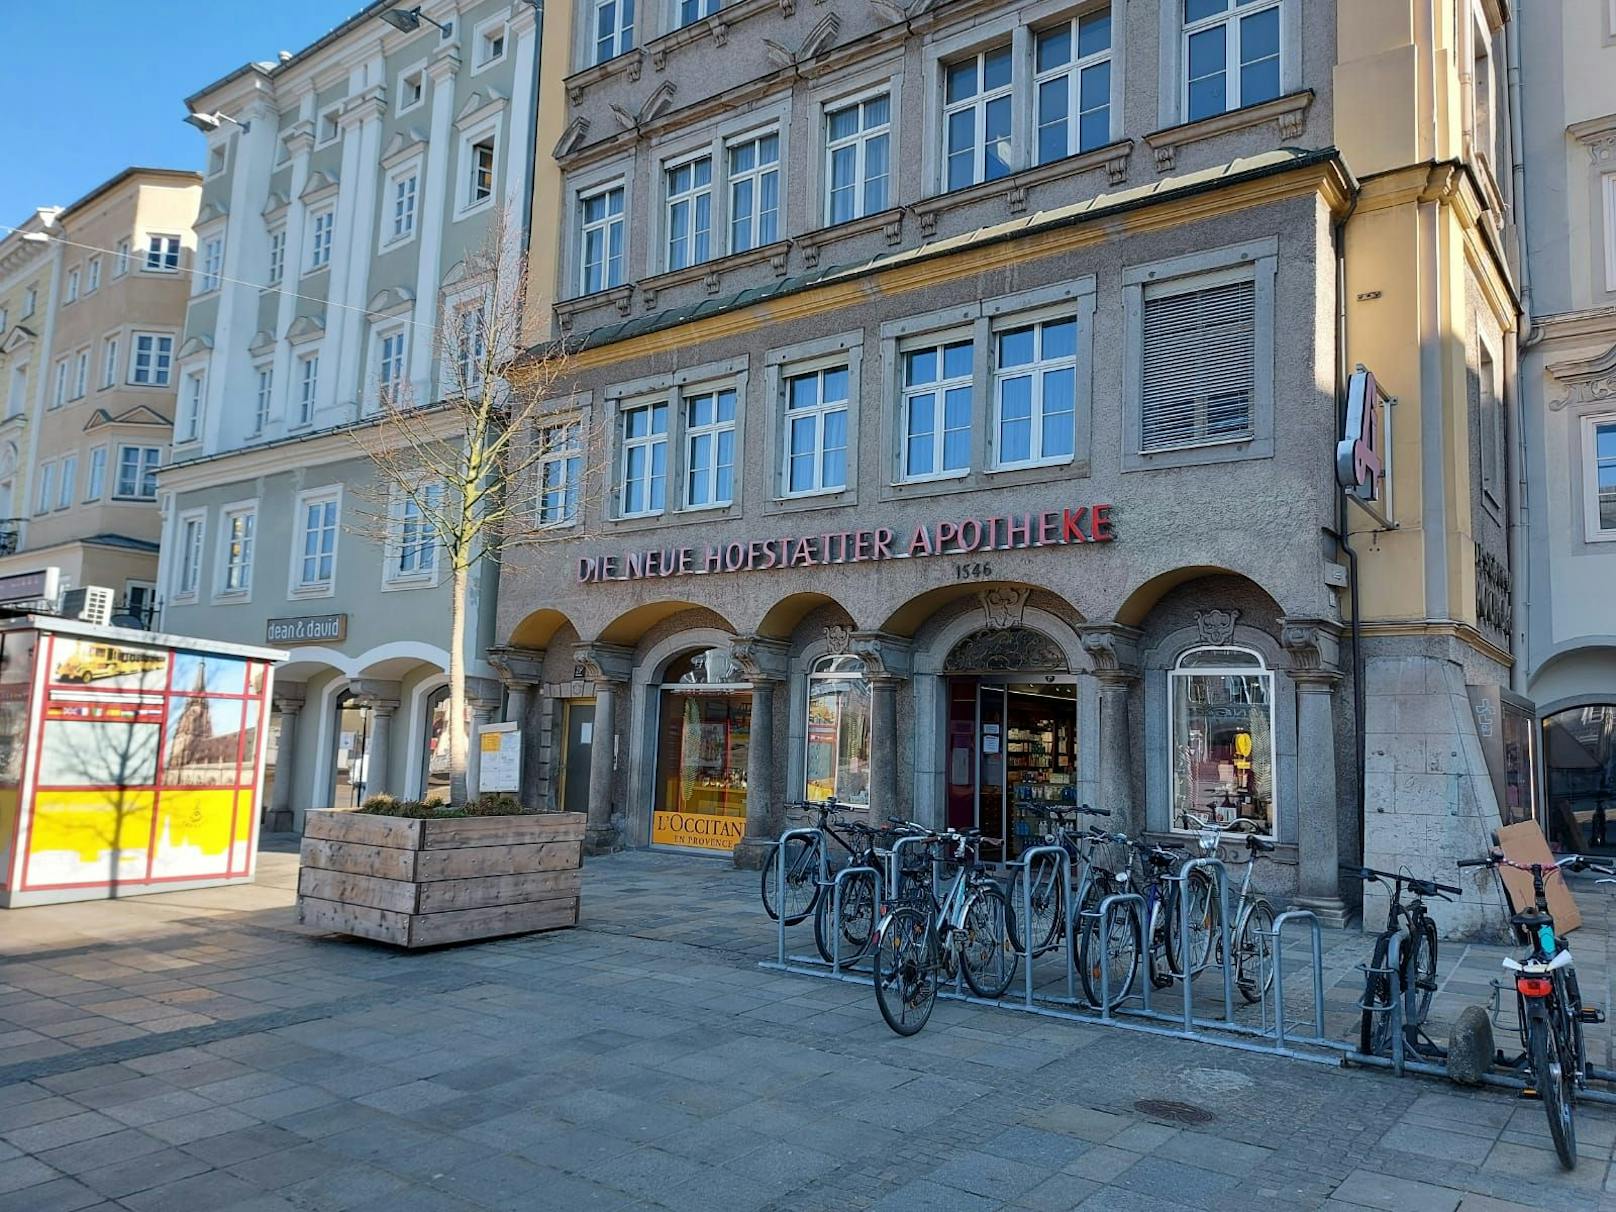 In der Hofstätter-Apotheke am Linzer Hauptplatz herrschte schon in der Früh reger Andrang.